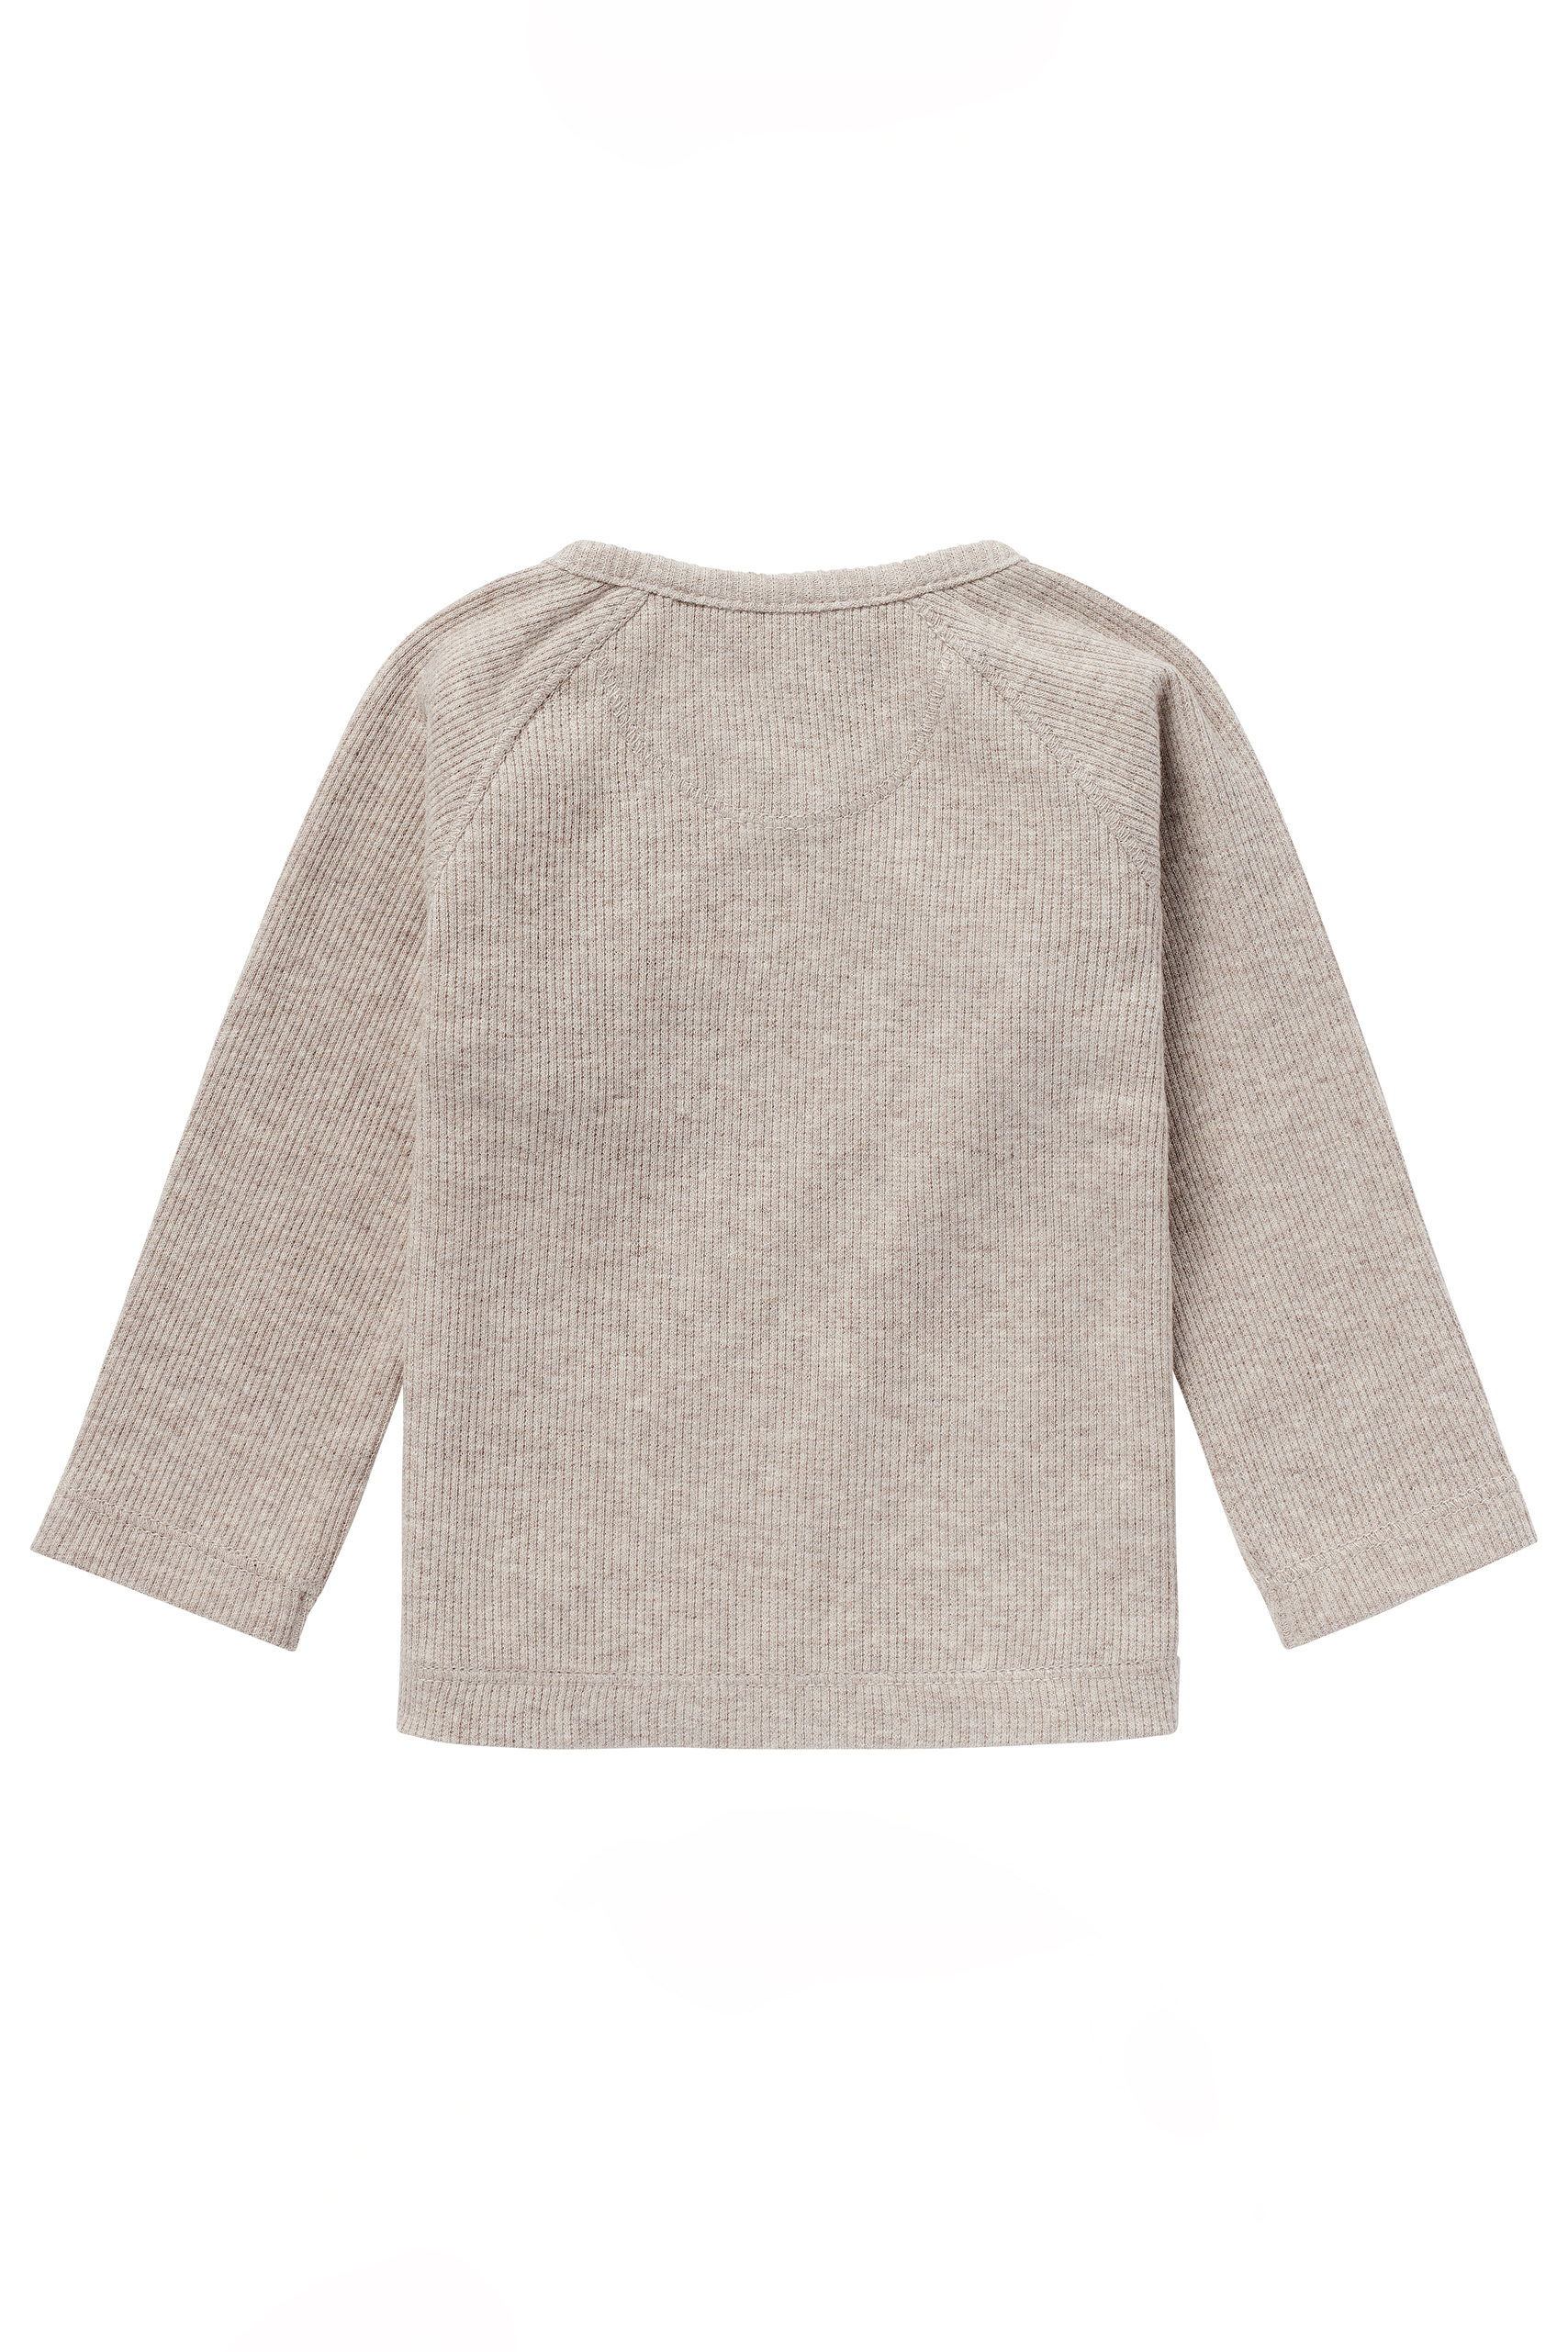 Wrap Mamarella online Baby taupe | Shirt order